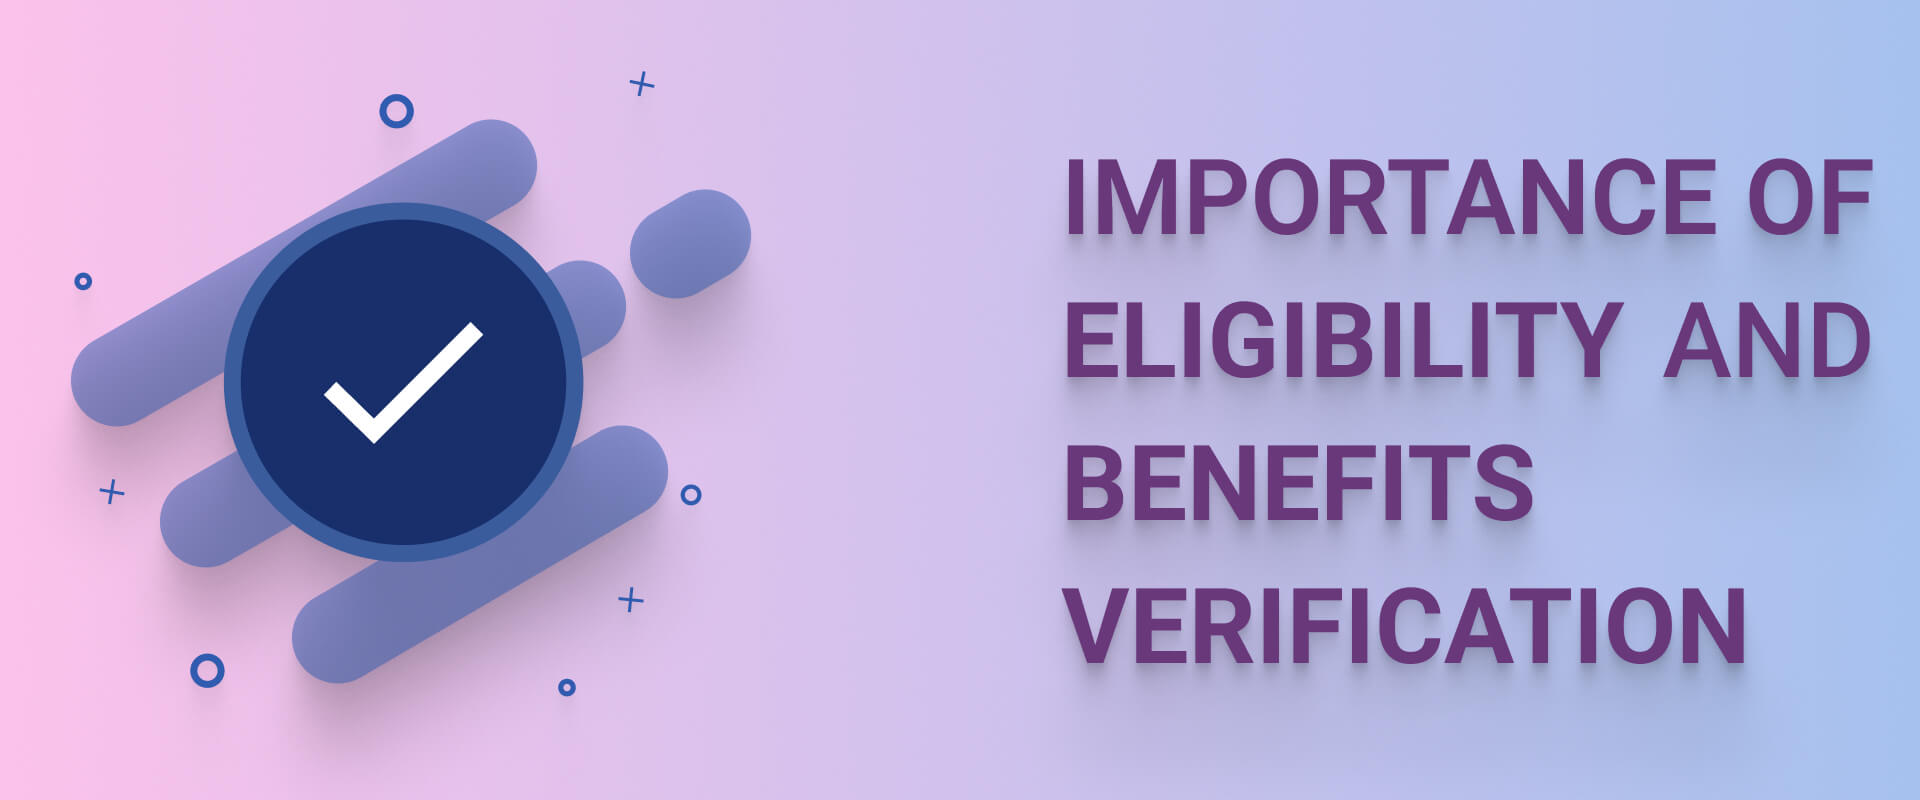 importance of eligibility and benefits verification